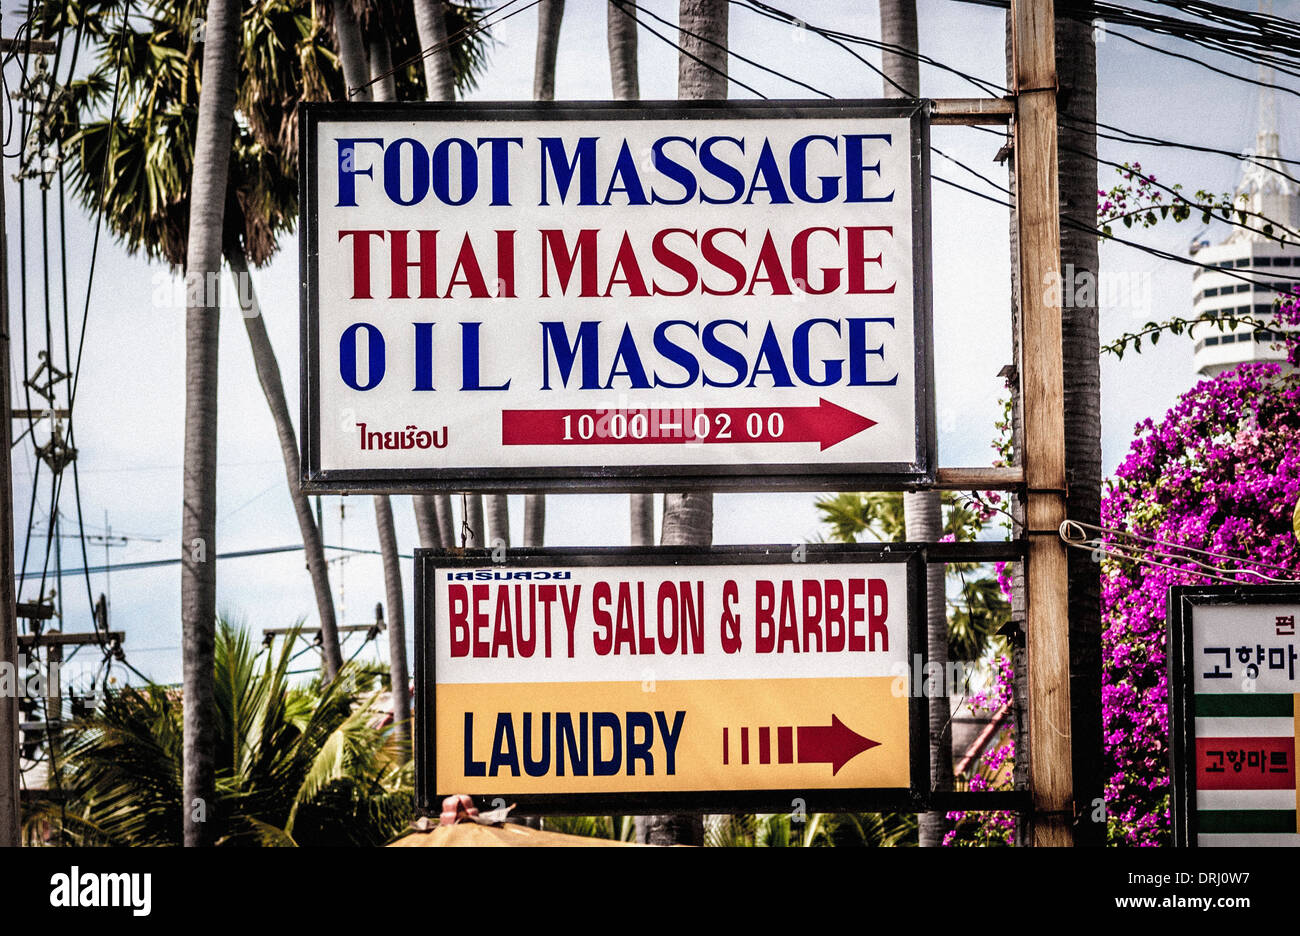 Massage signs, Pattaya, Thailand Stock Photo - Alamy